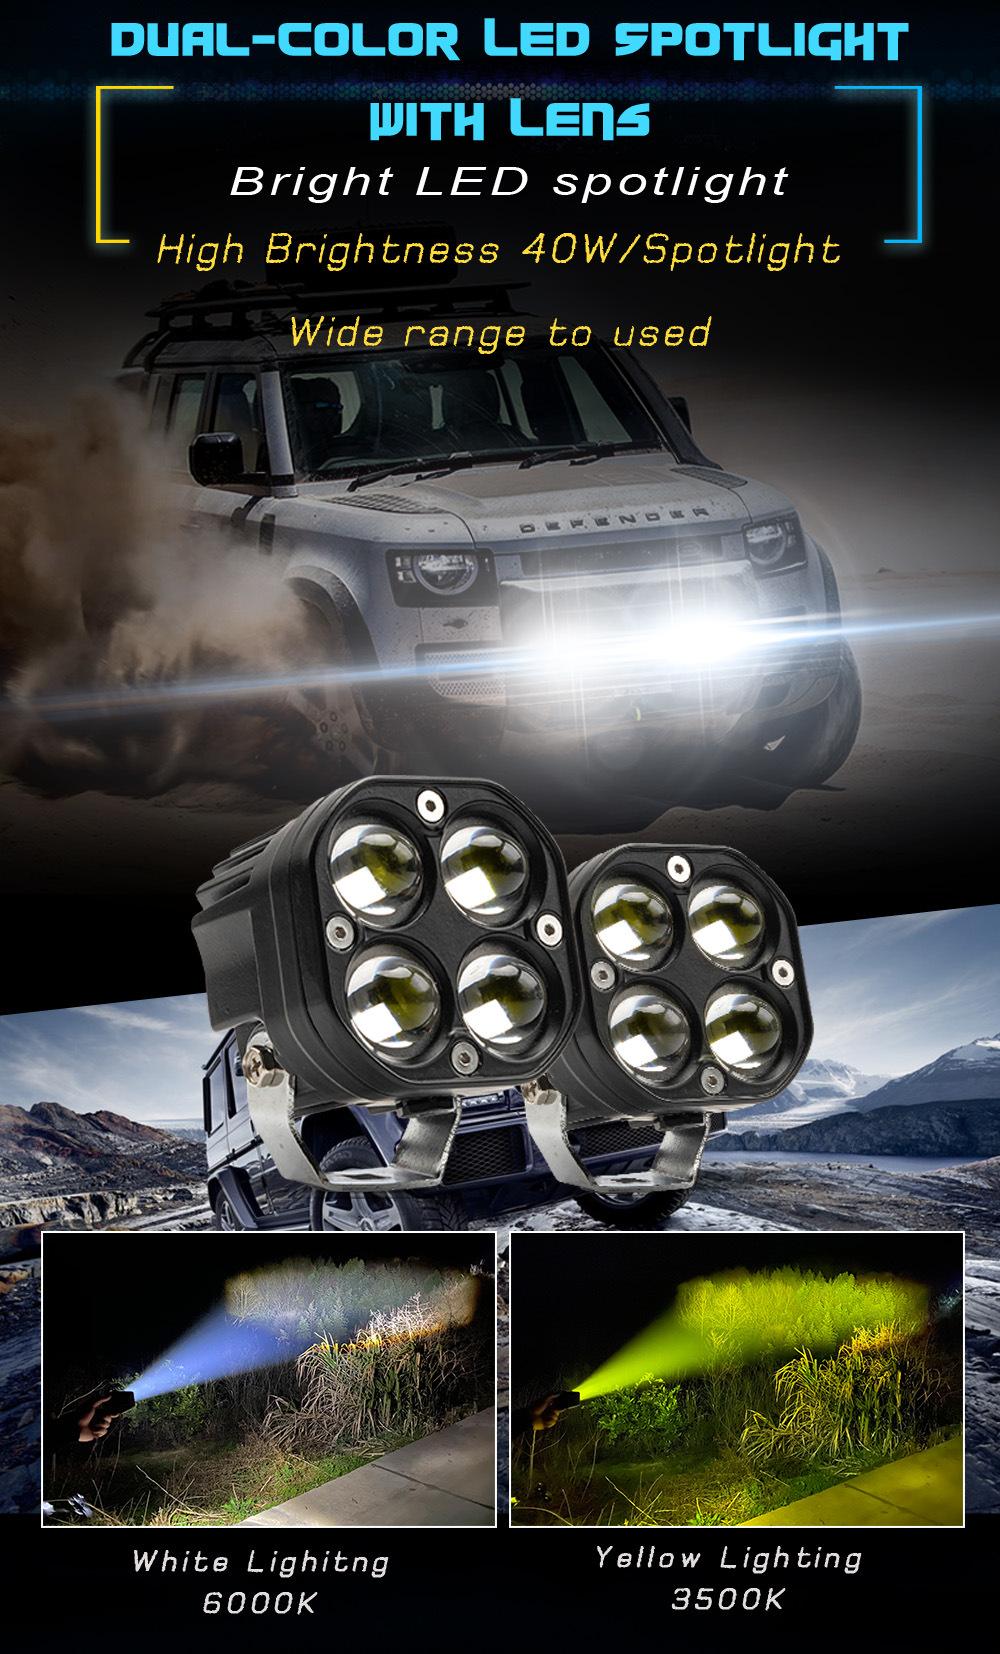 3 Inch 60W Cube LED Work Light with 4 Pod Lens for 12V 24V Car SUV Truck Offroad Motorcycle LED Fog Driving Light